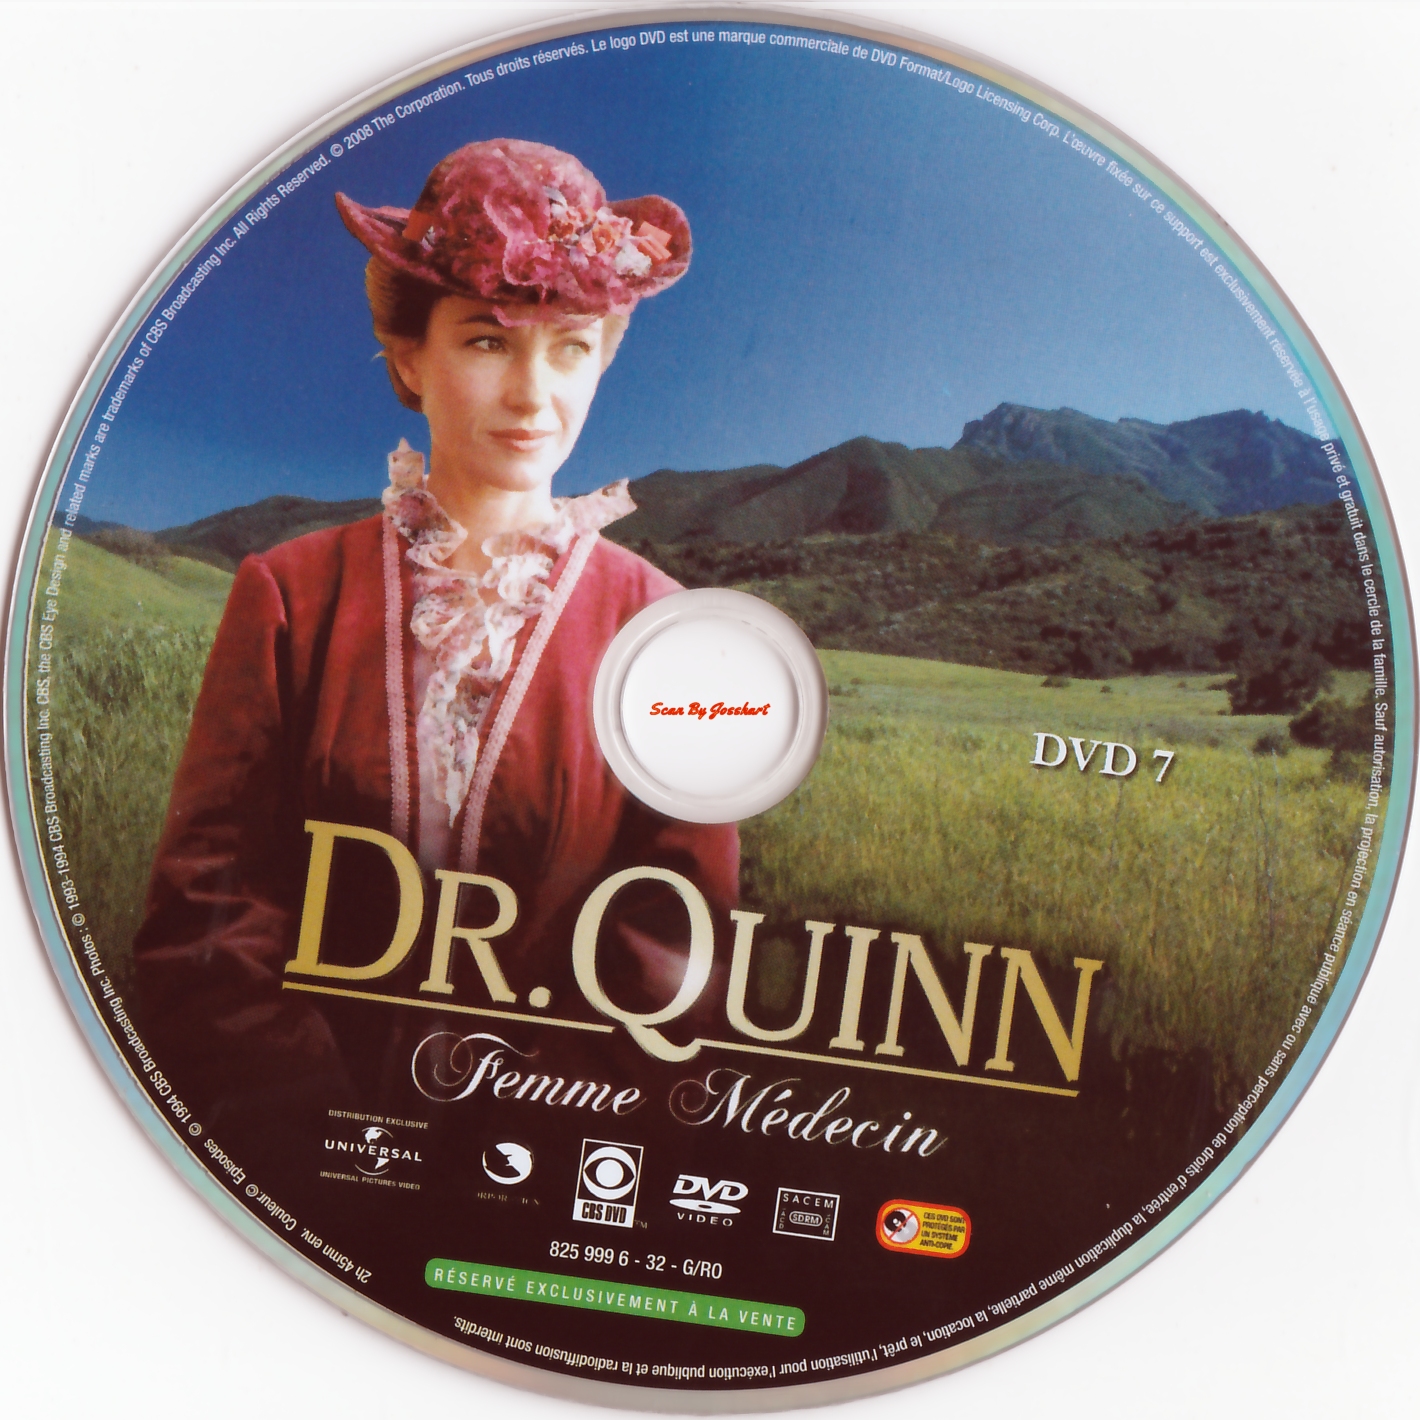 Docteur Quinn femme mdecin - Integrale Saison 2 DISC 7